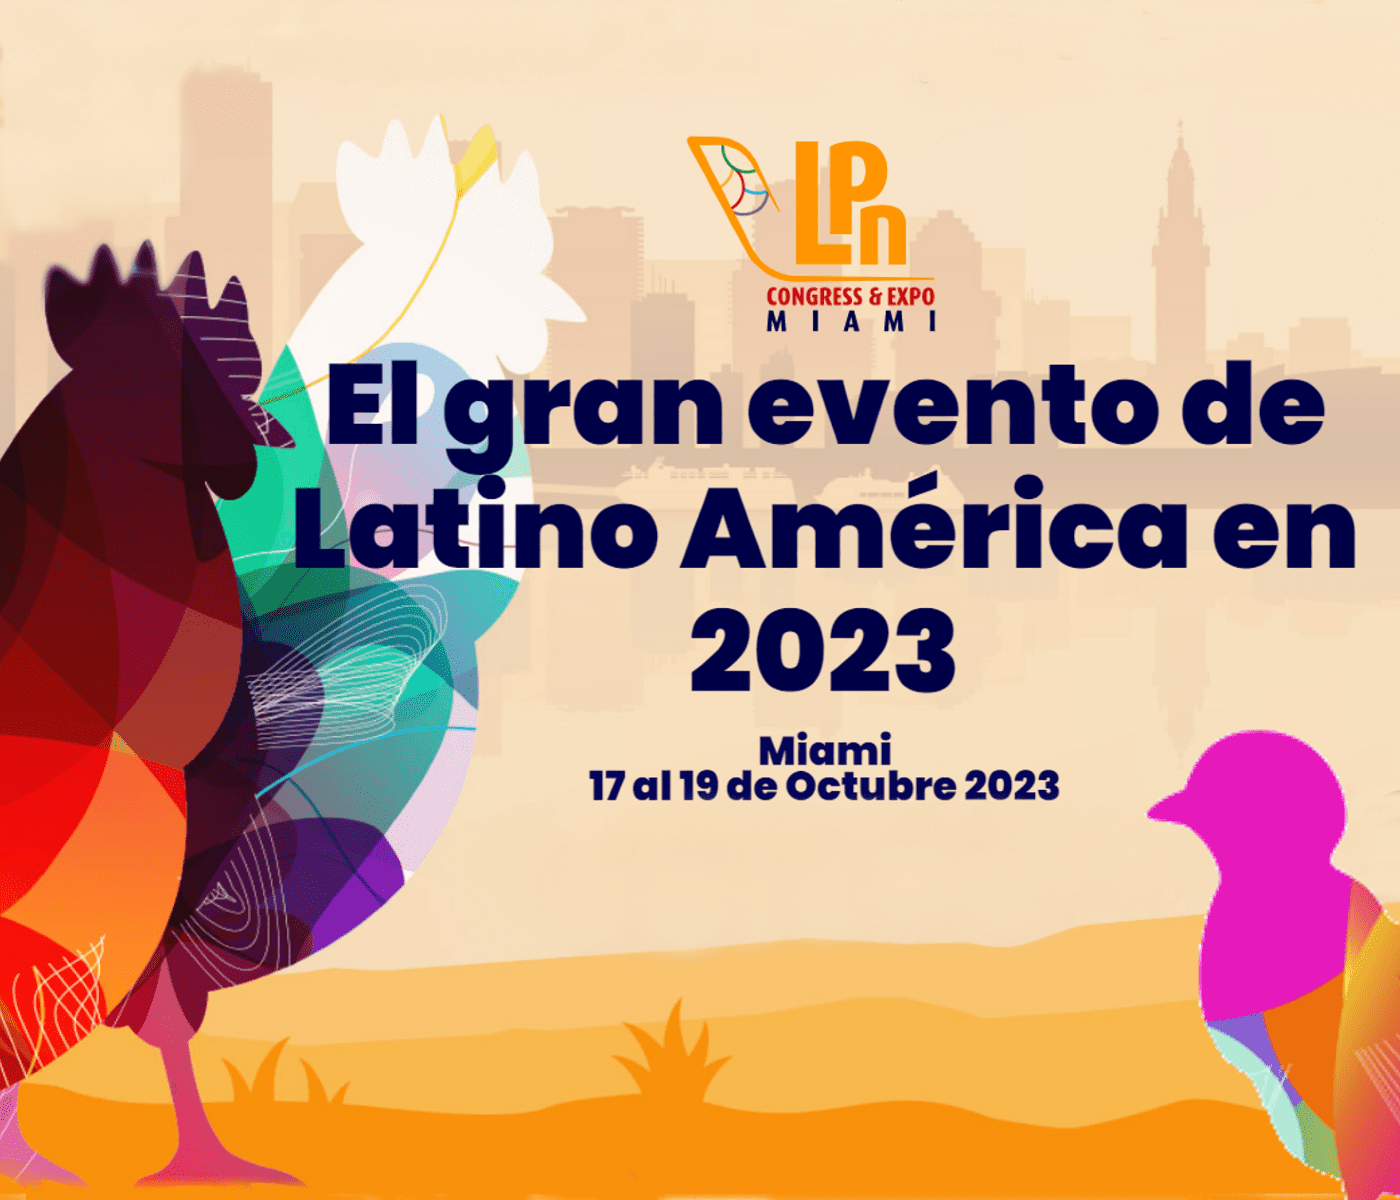 LPN Congress 2023: Extraordinaria zona expositiva para los decisores de la avicultura latinoamericana